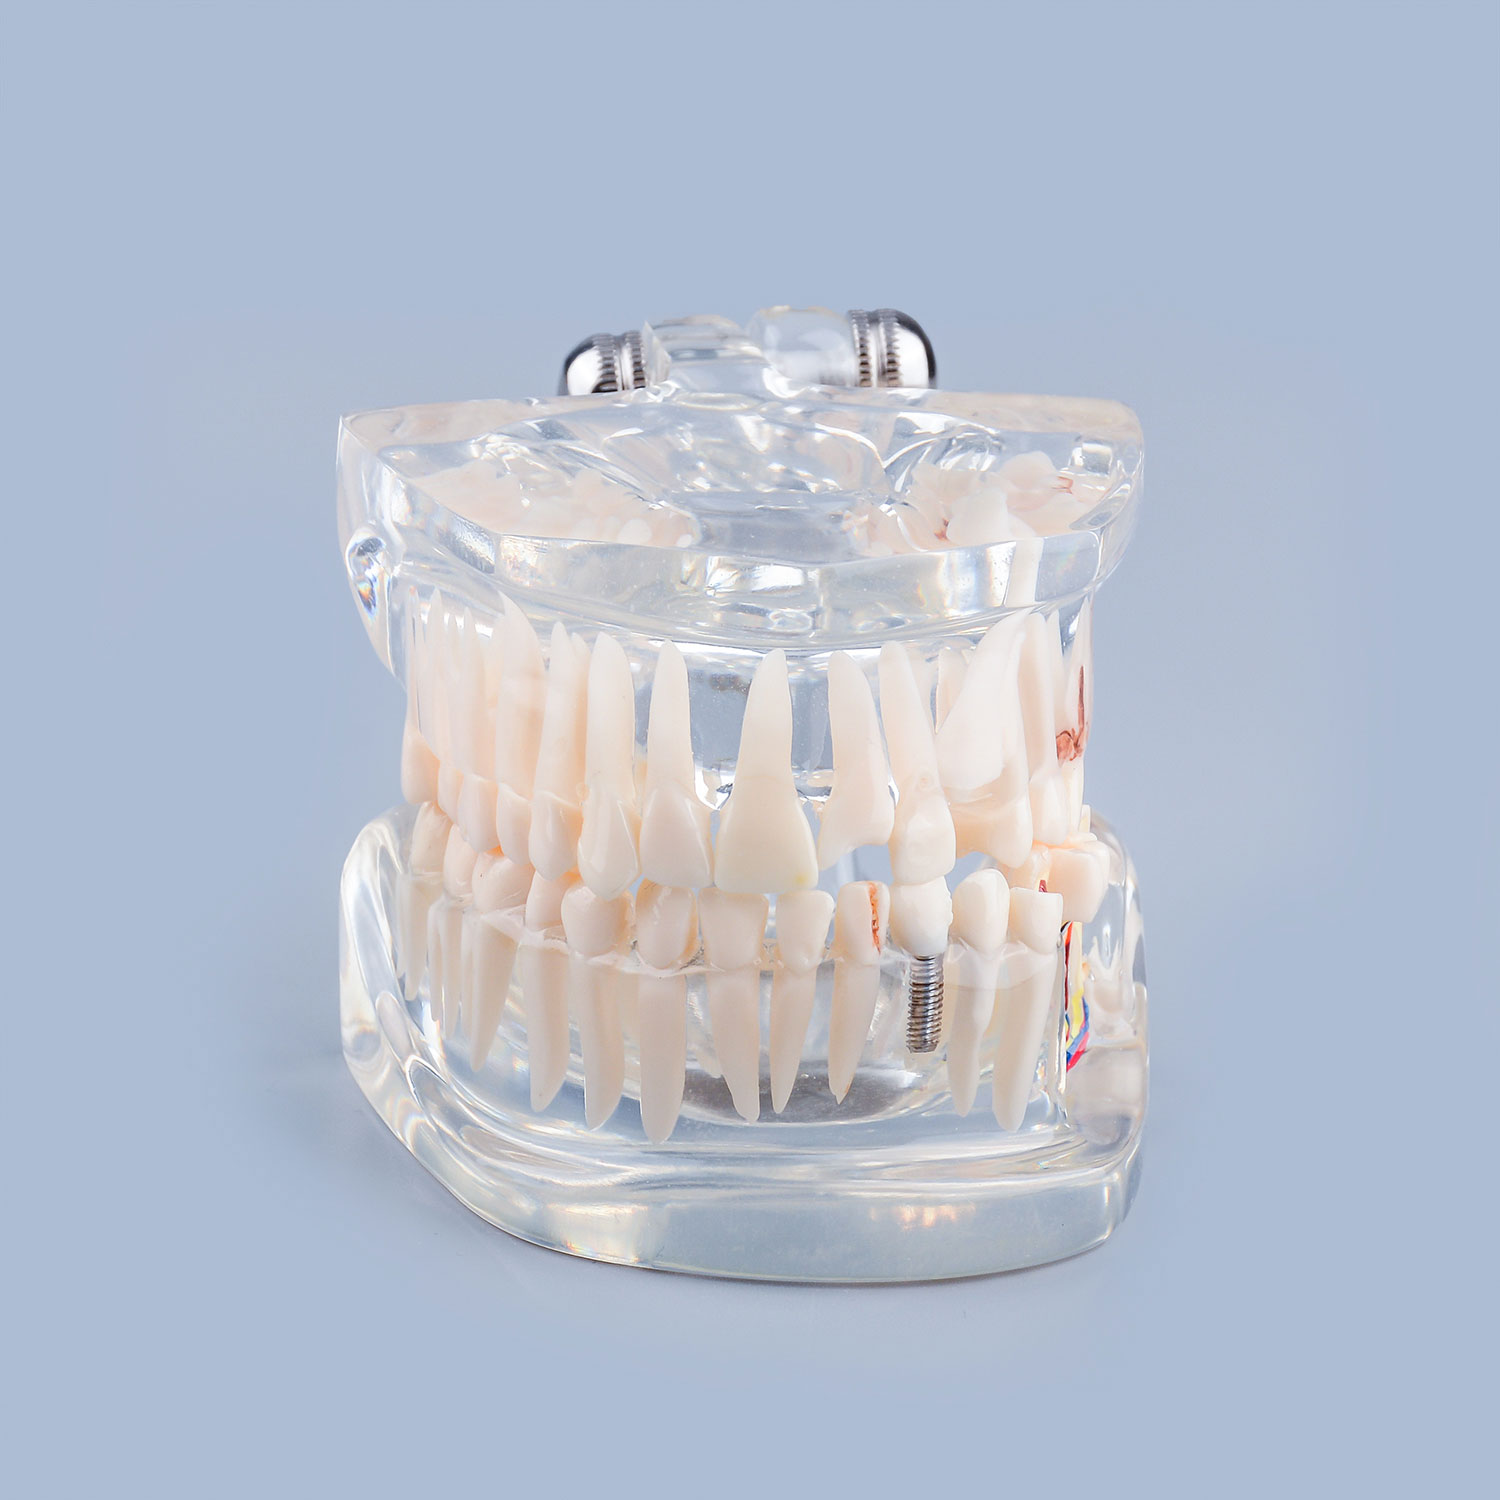 Transparent Disease Teeth Model Missing Gum for Patient & Student Education